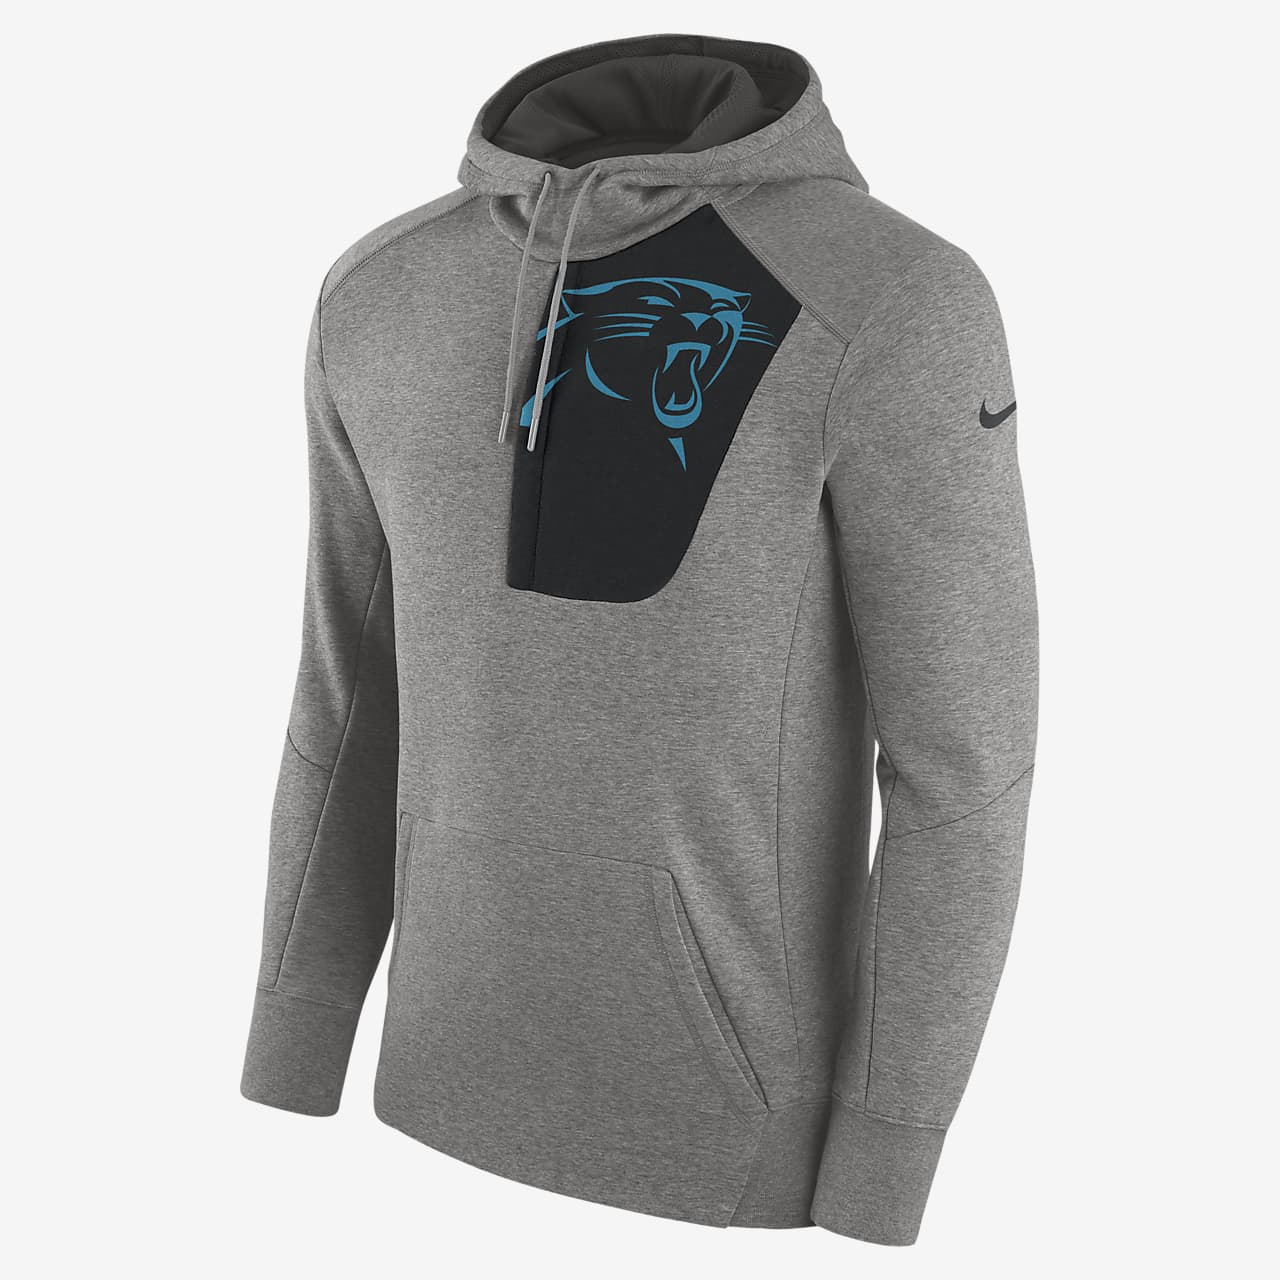 Nike Fly Fleece (NFL Panthers) Men's 